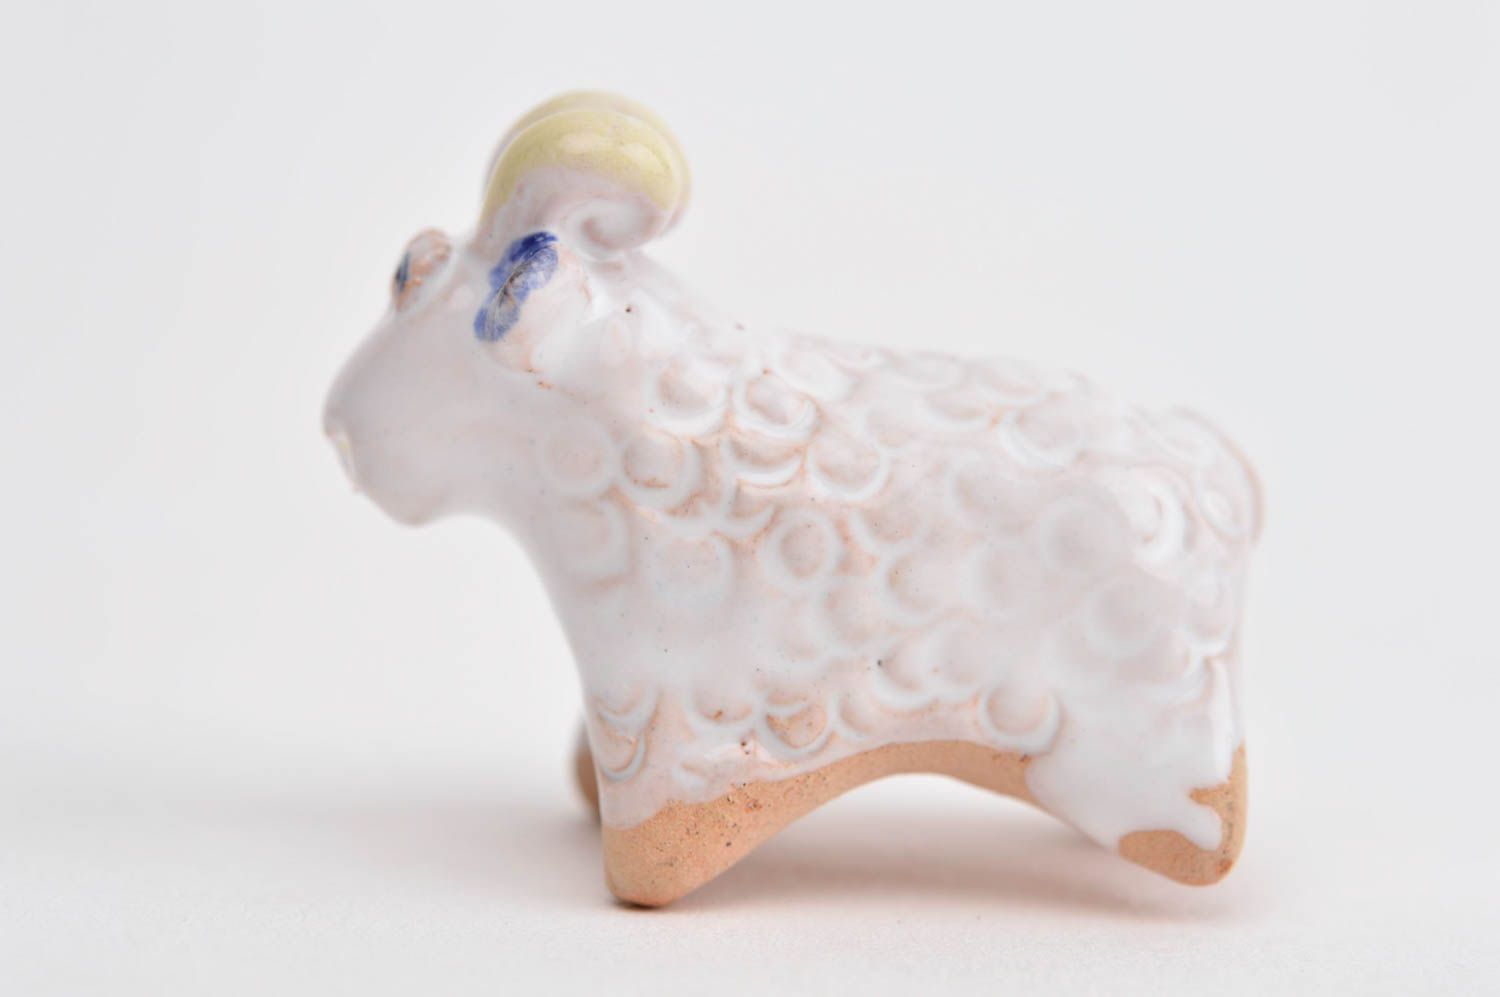 Schaf handmade Keramik Deko schöne Figur aus Ton Tier Miniatur Figur toll foto 7